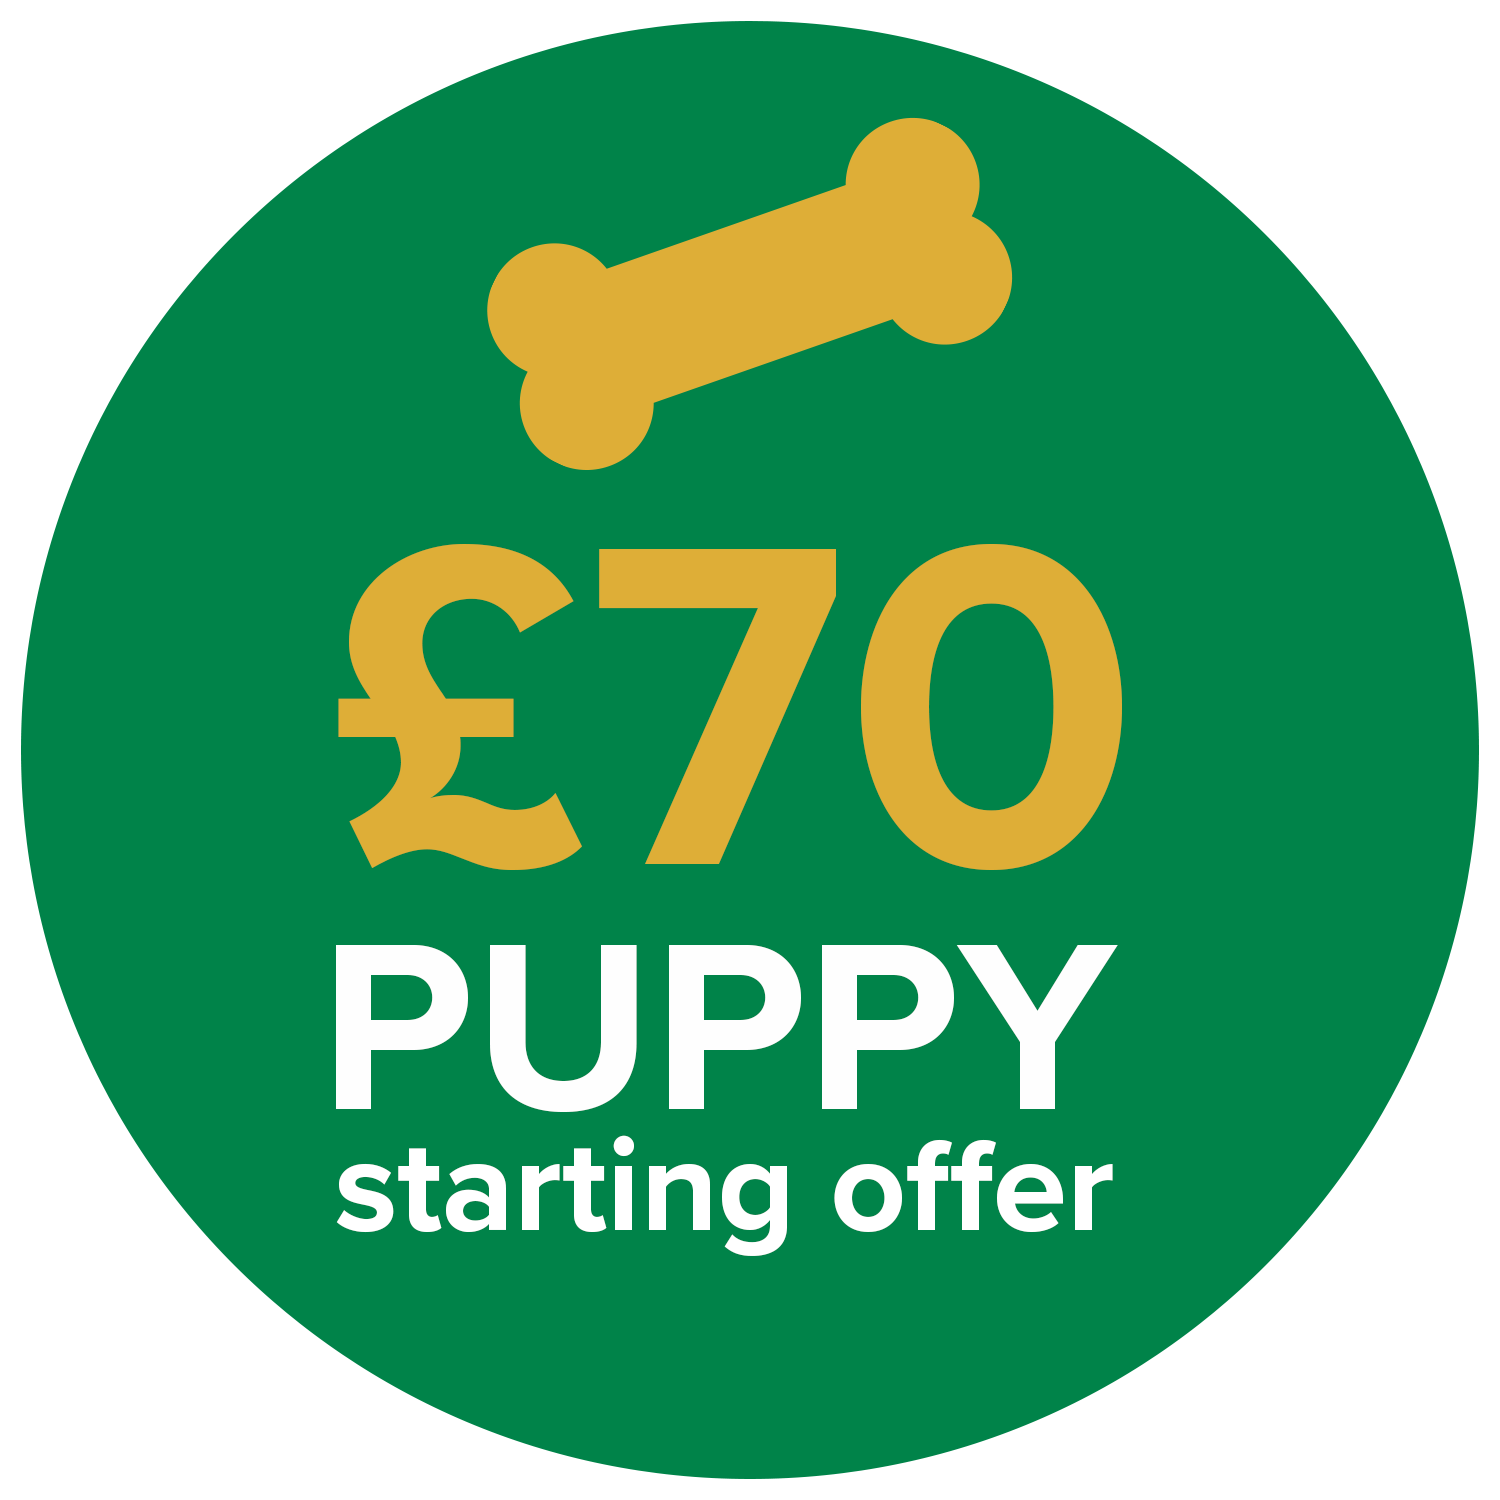 Parkside Vets - Puppy Plan offer - £60